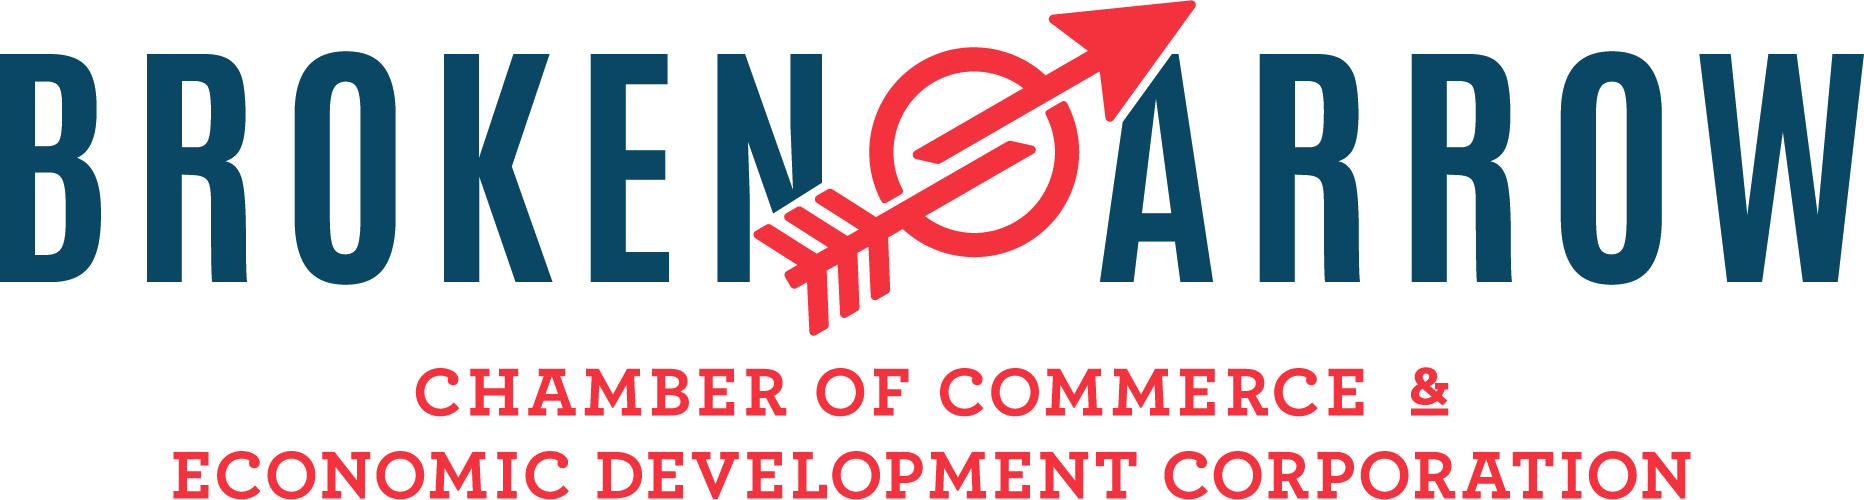 Broken Arrow Chamber Of Commerce and Economic Development Corporation Slide Image